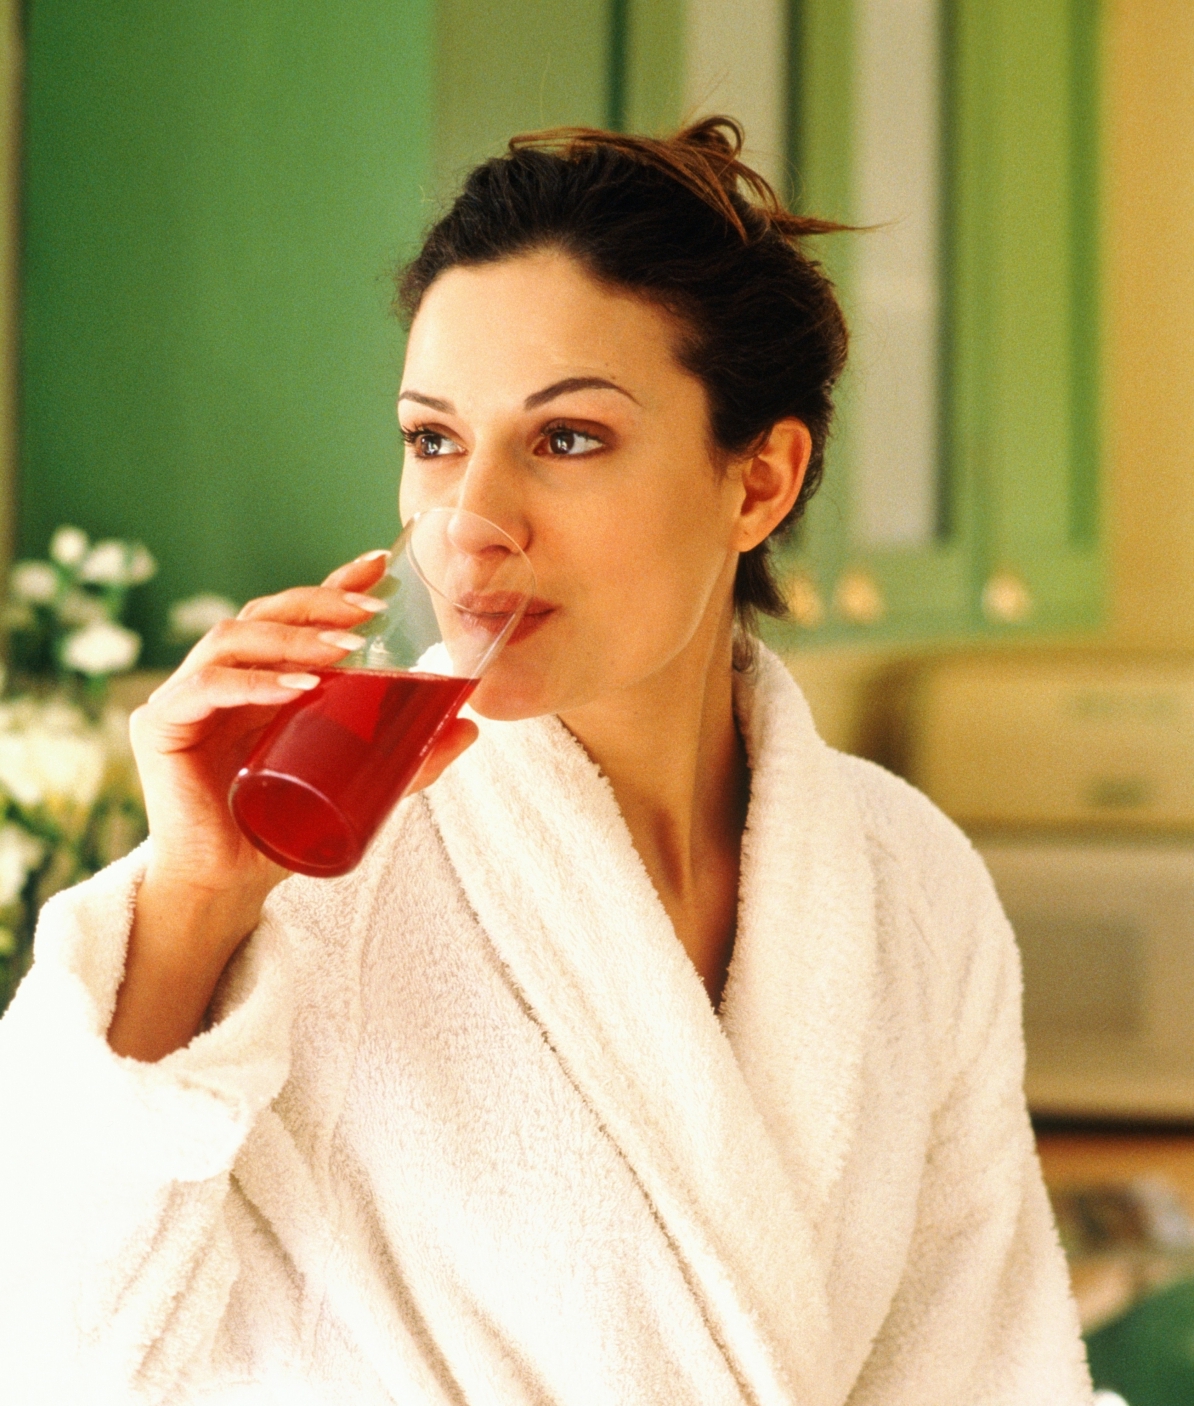 6 Surprising Health Benefits of Drinking Cranberry Juice